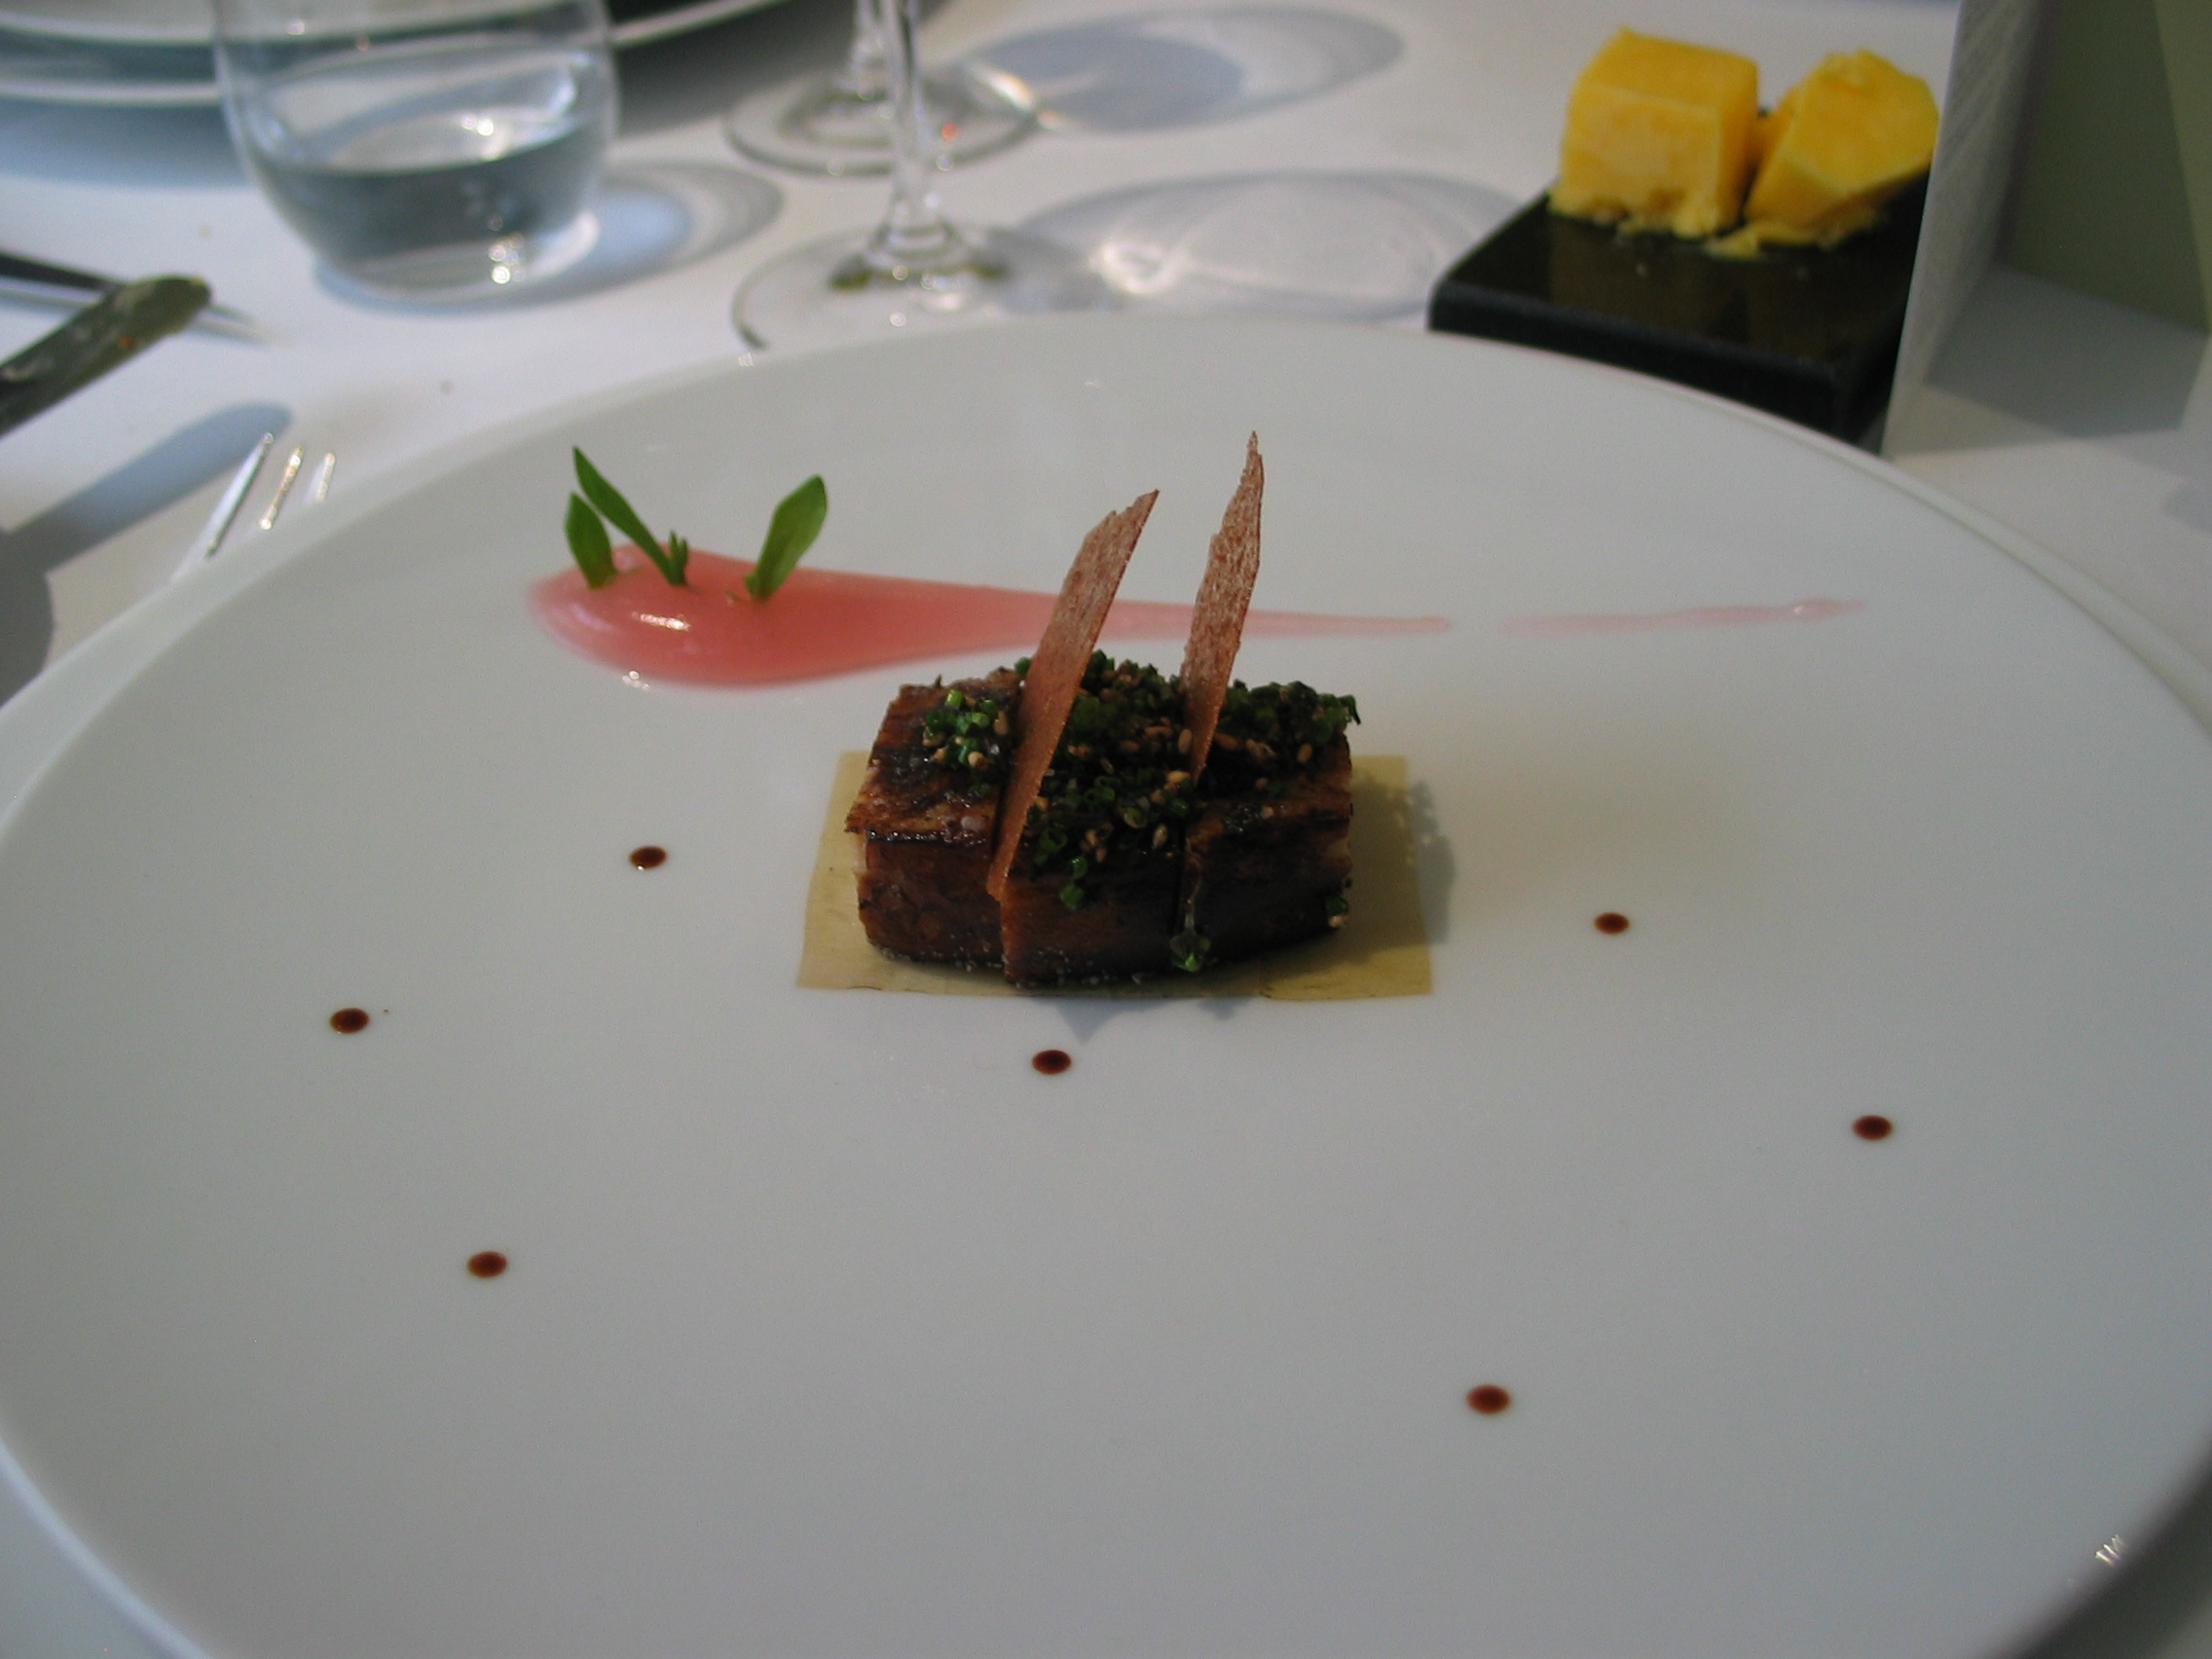 Rhubarb foire gras 1